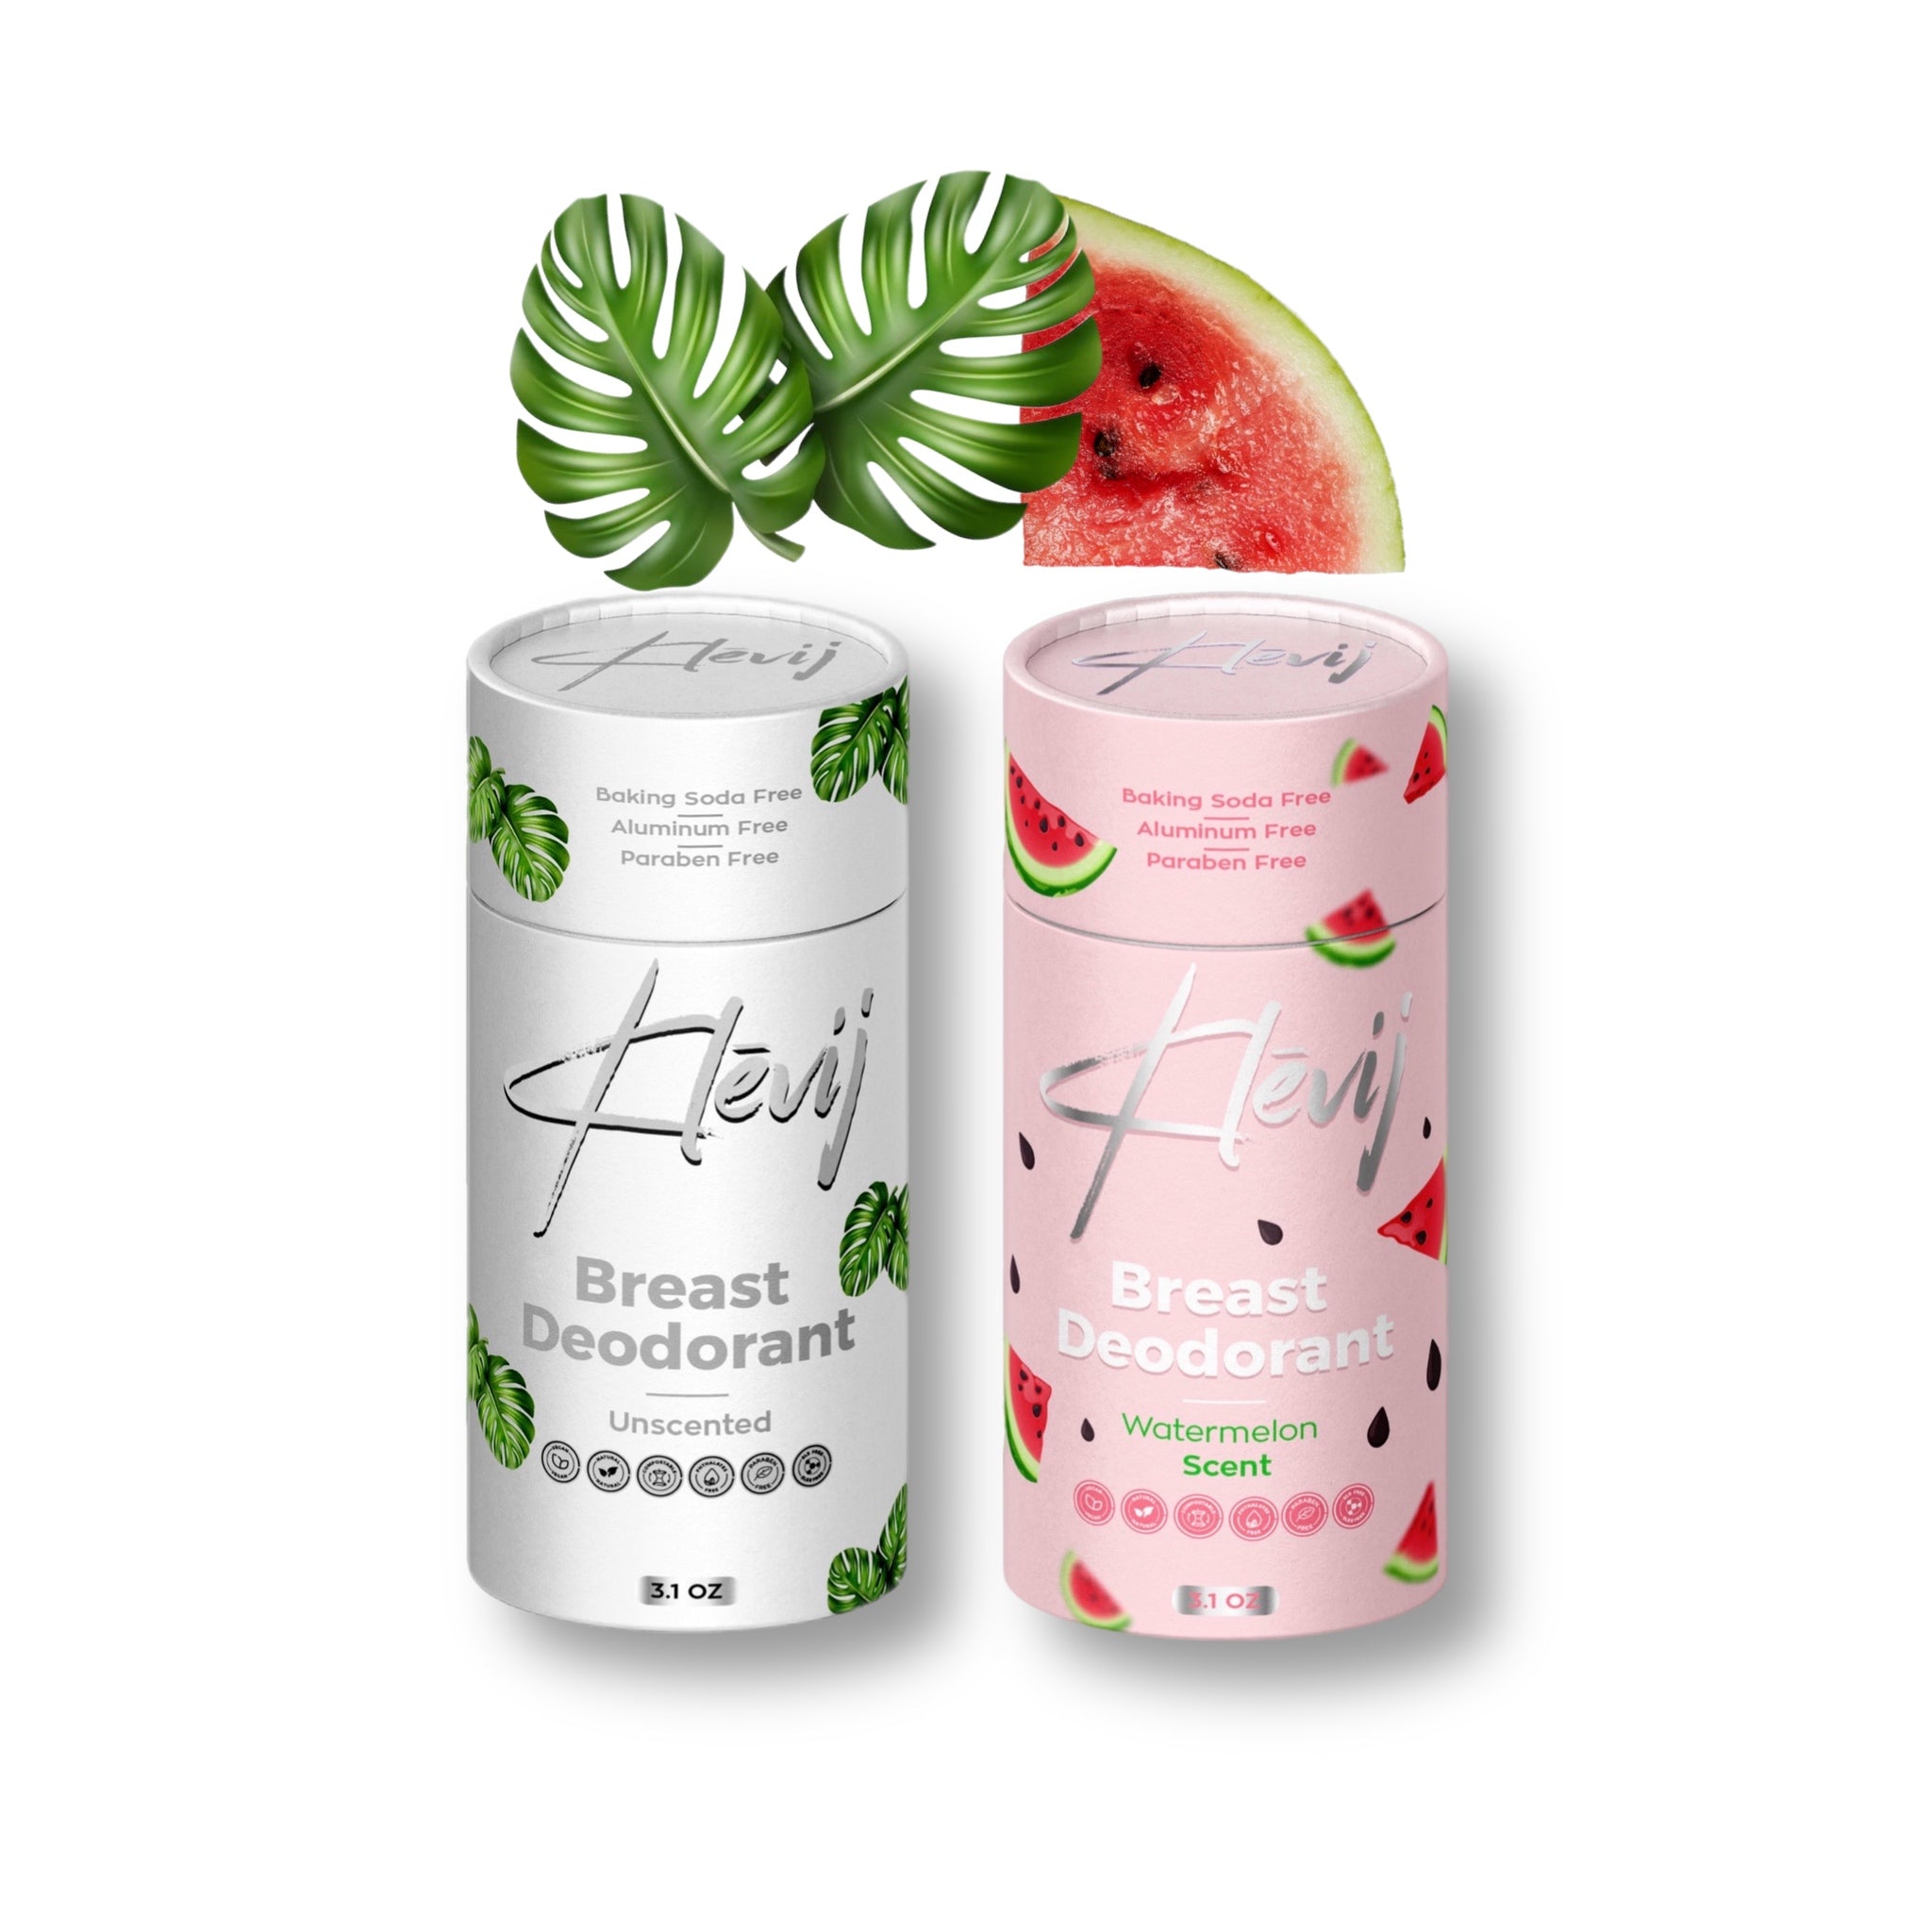 Klevij Breast Deodorant | 2 Pack Varieties | Watermelon | Unscented | Powder Cloud |SunKissed Apricot